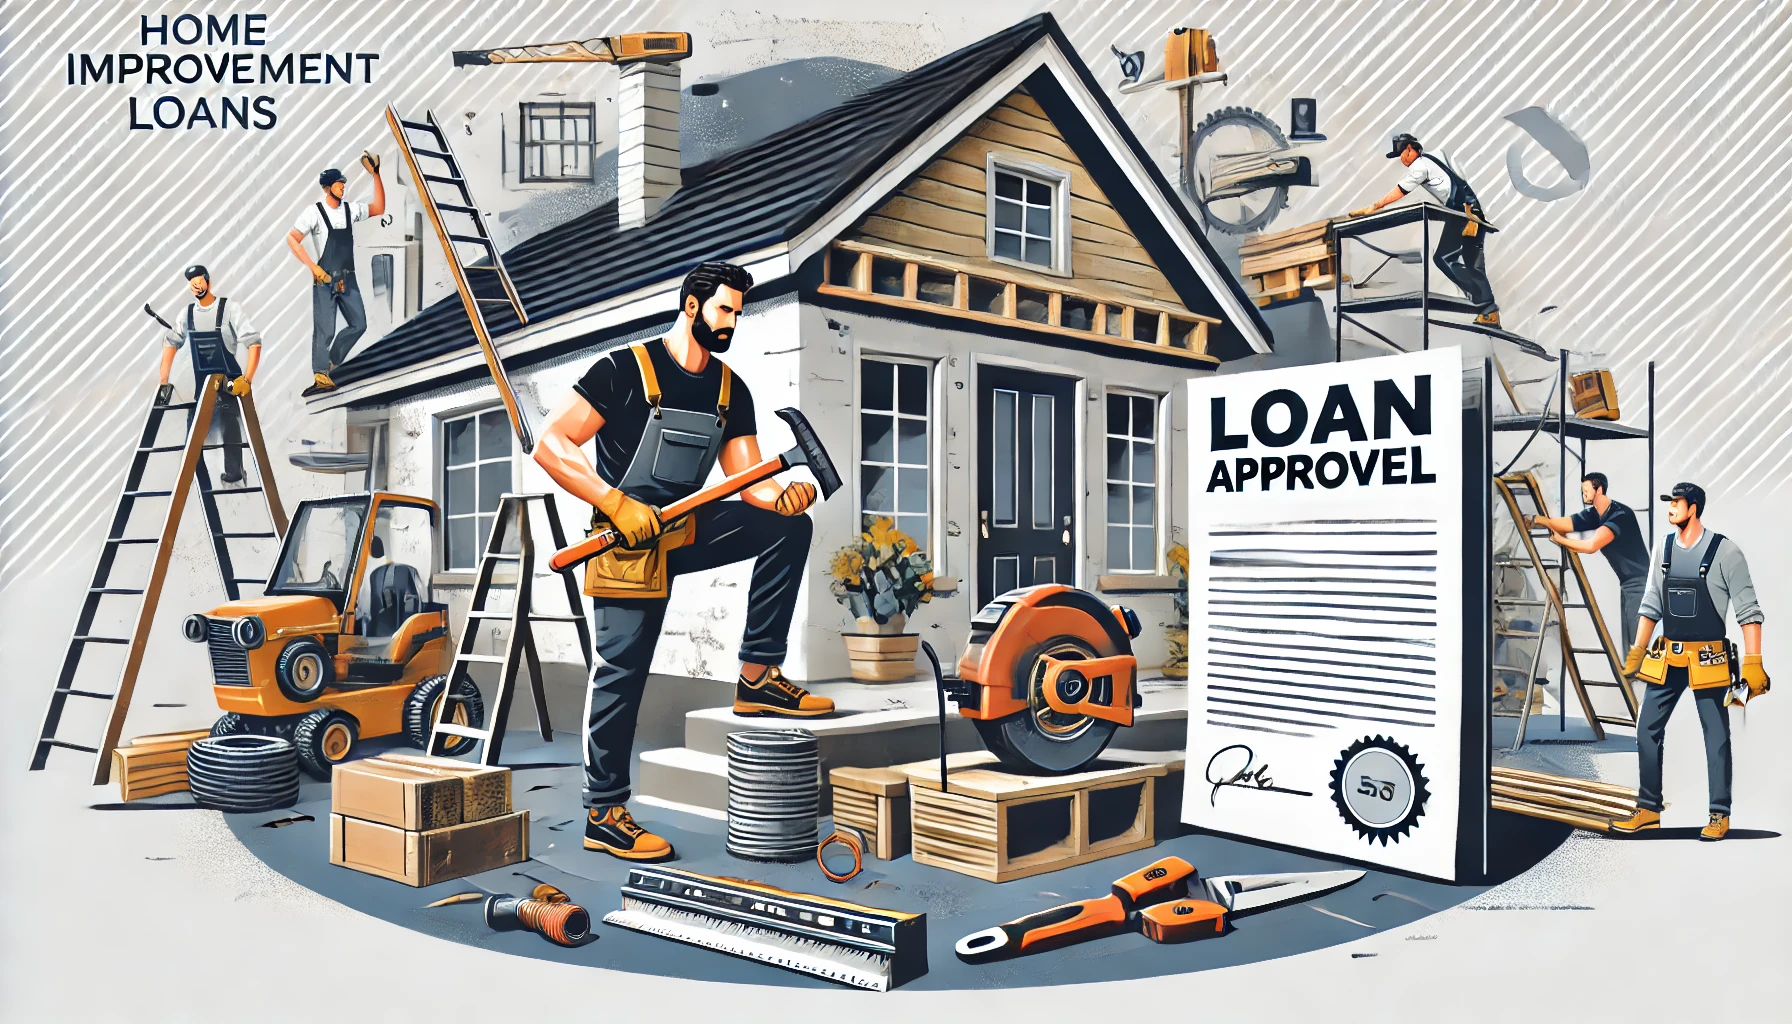 Home Improvement Loans for Men